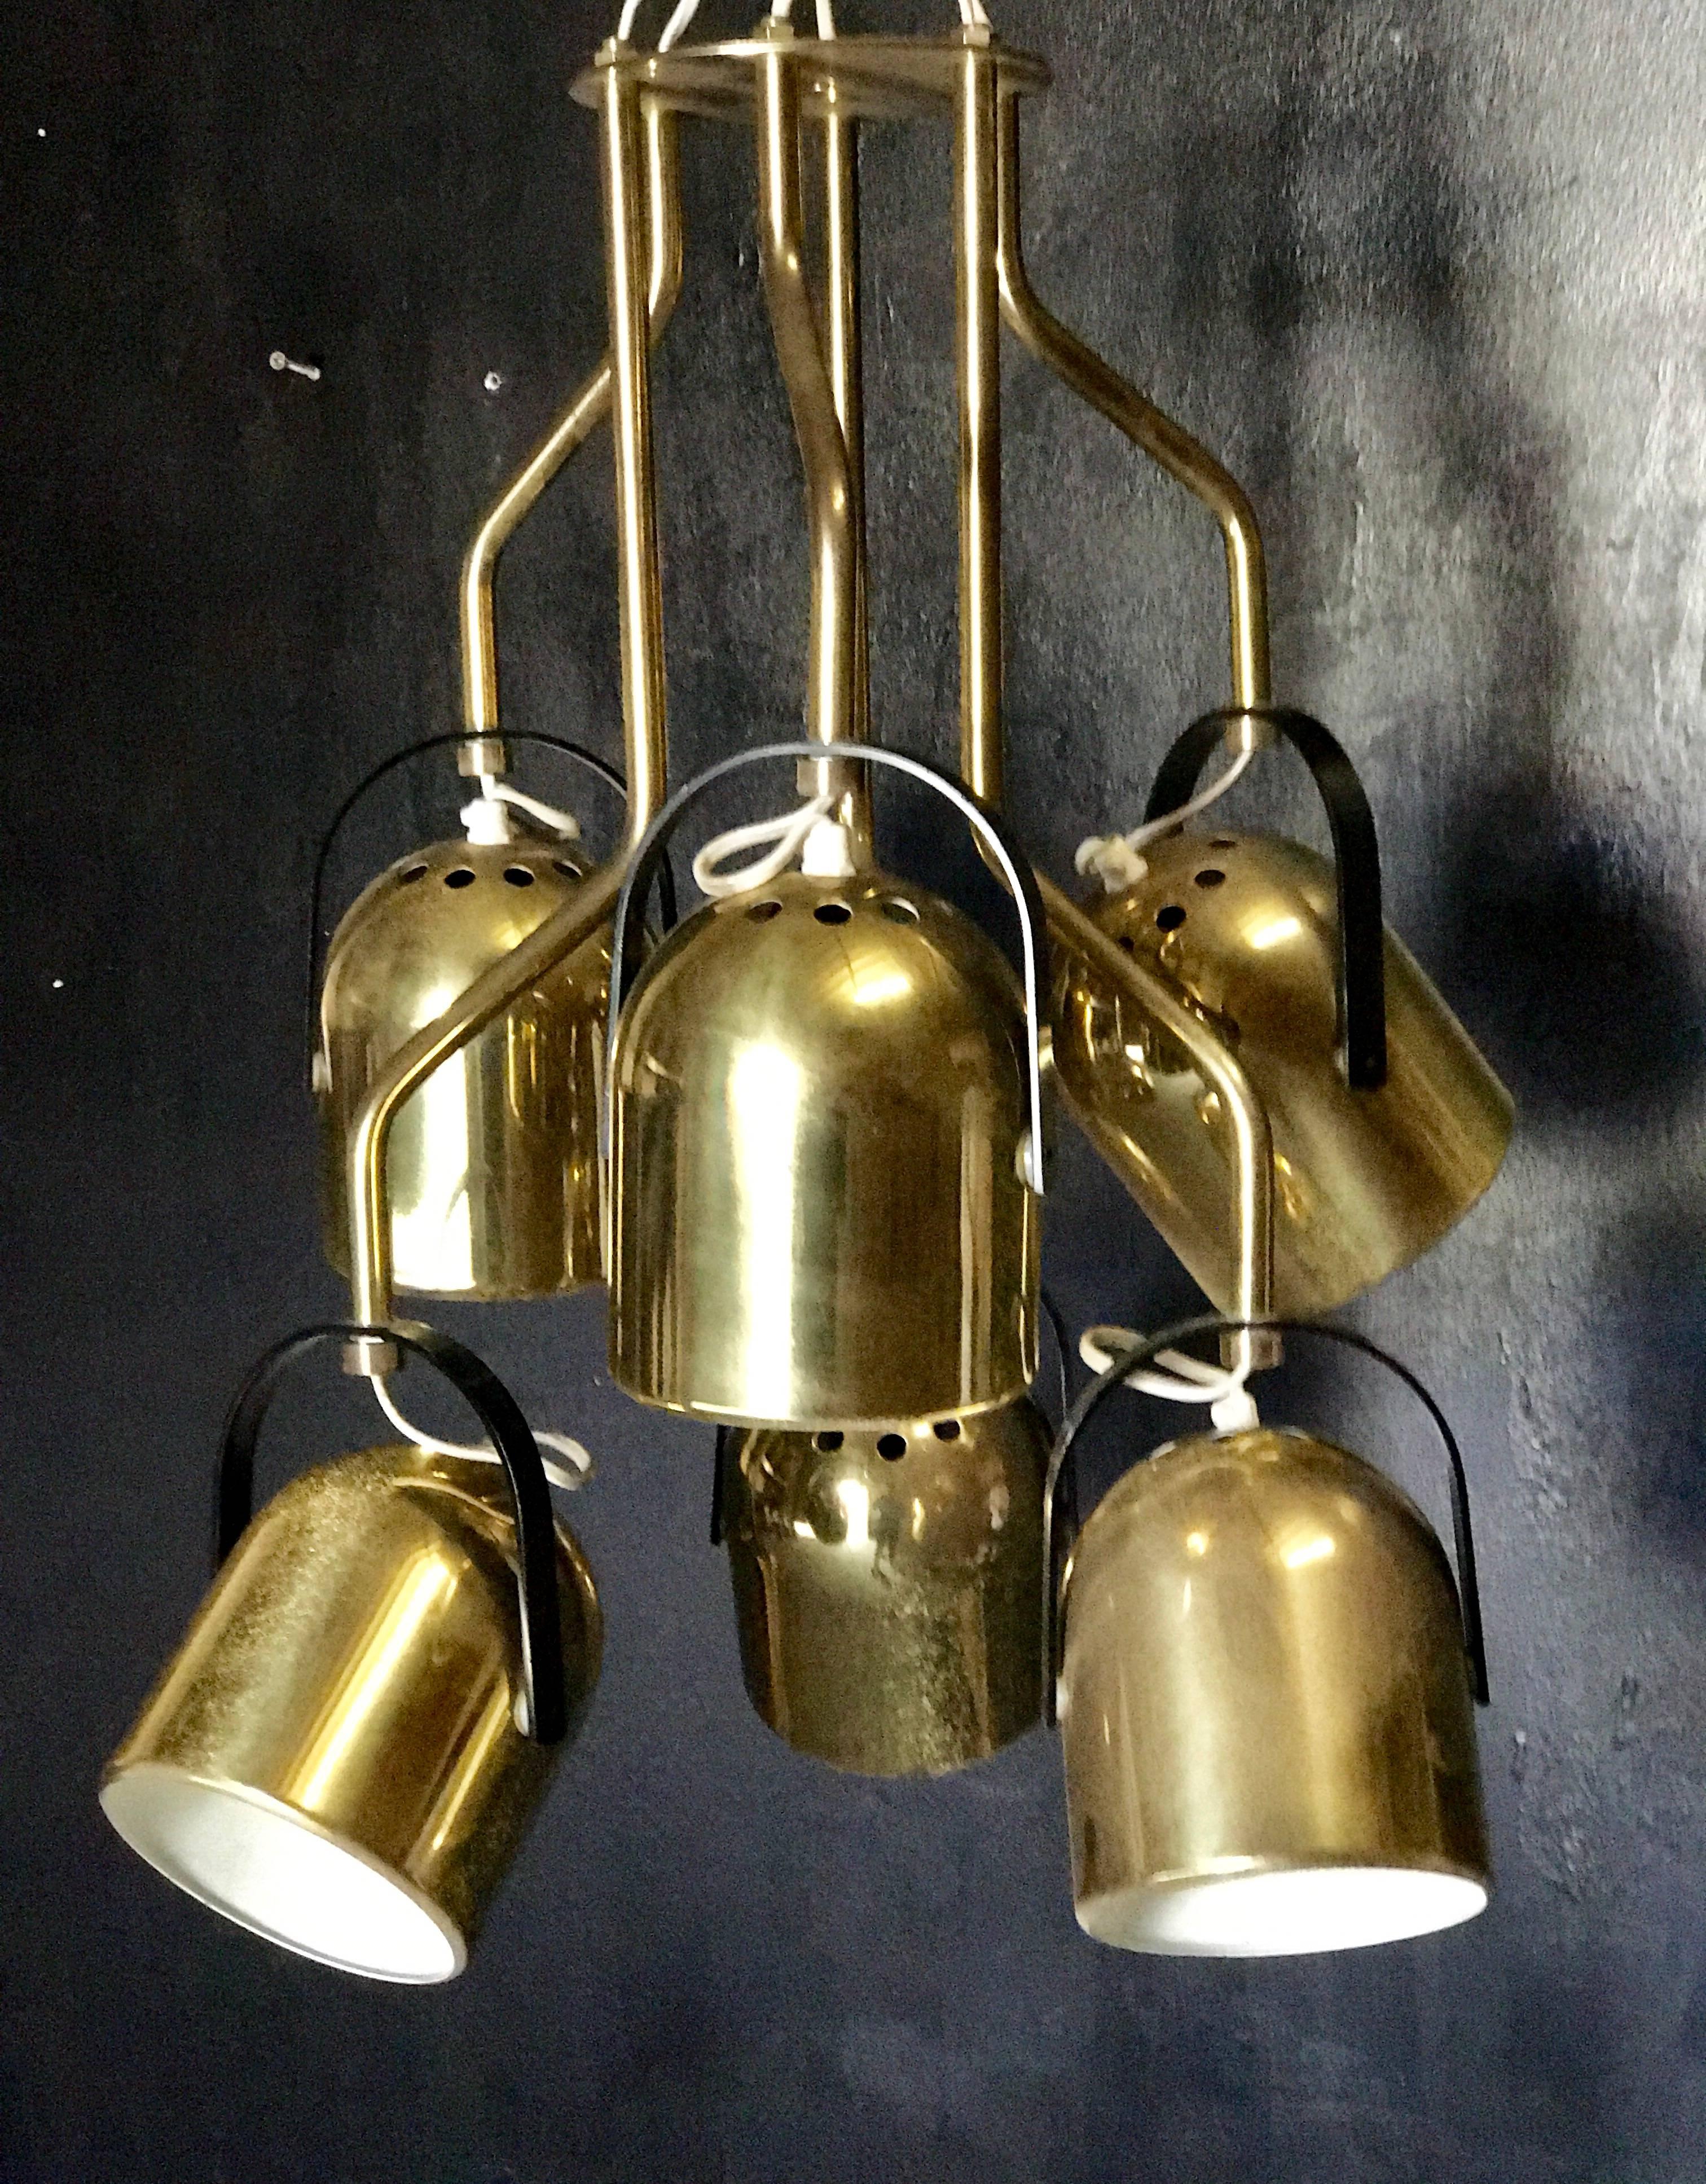 Italian 1970s brass pendant light
Six arms, six lights.